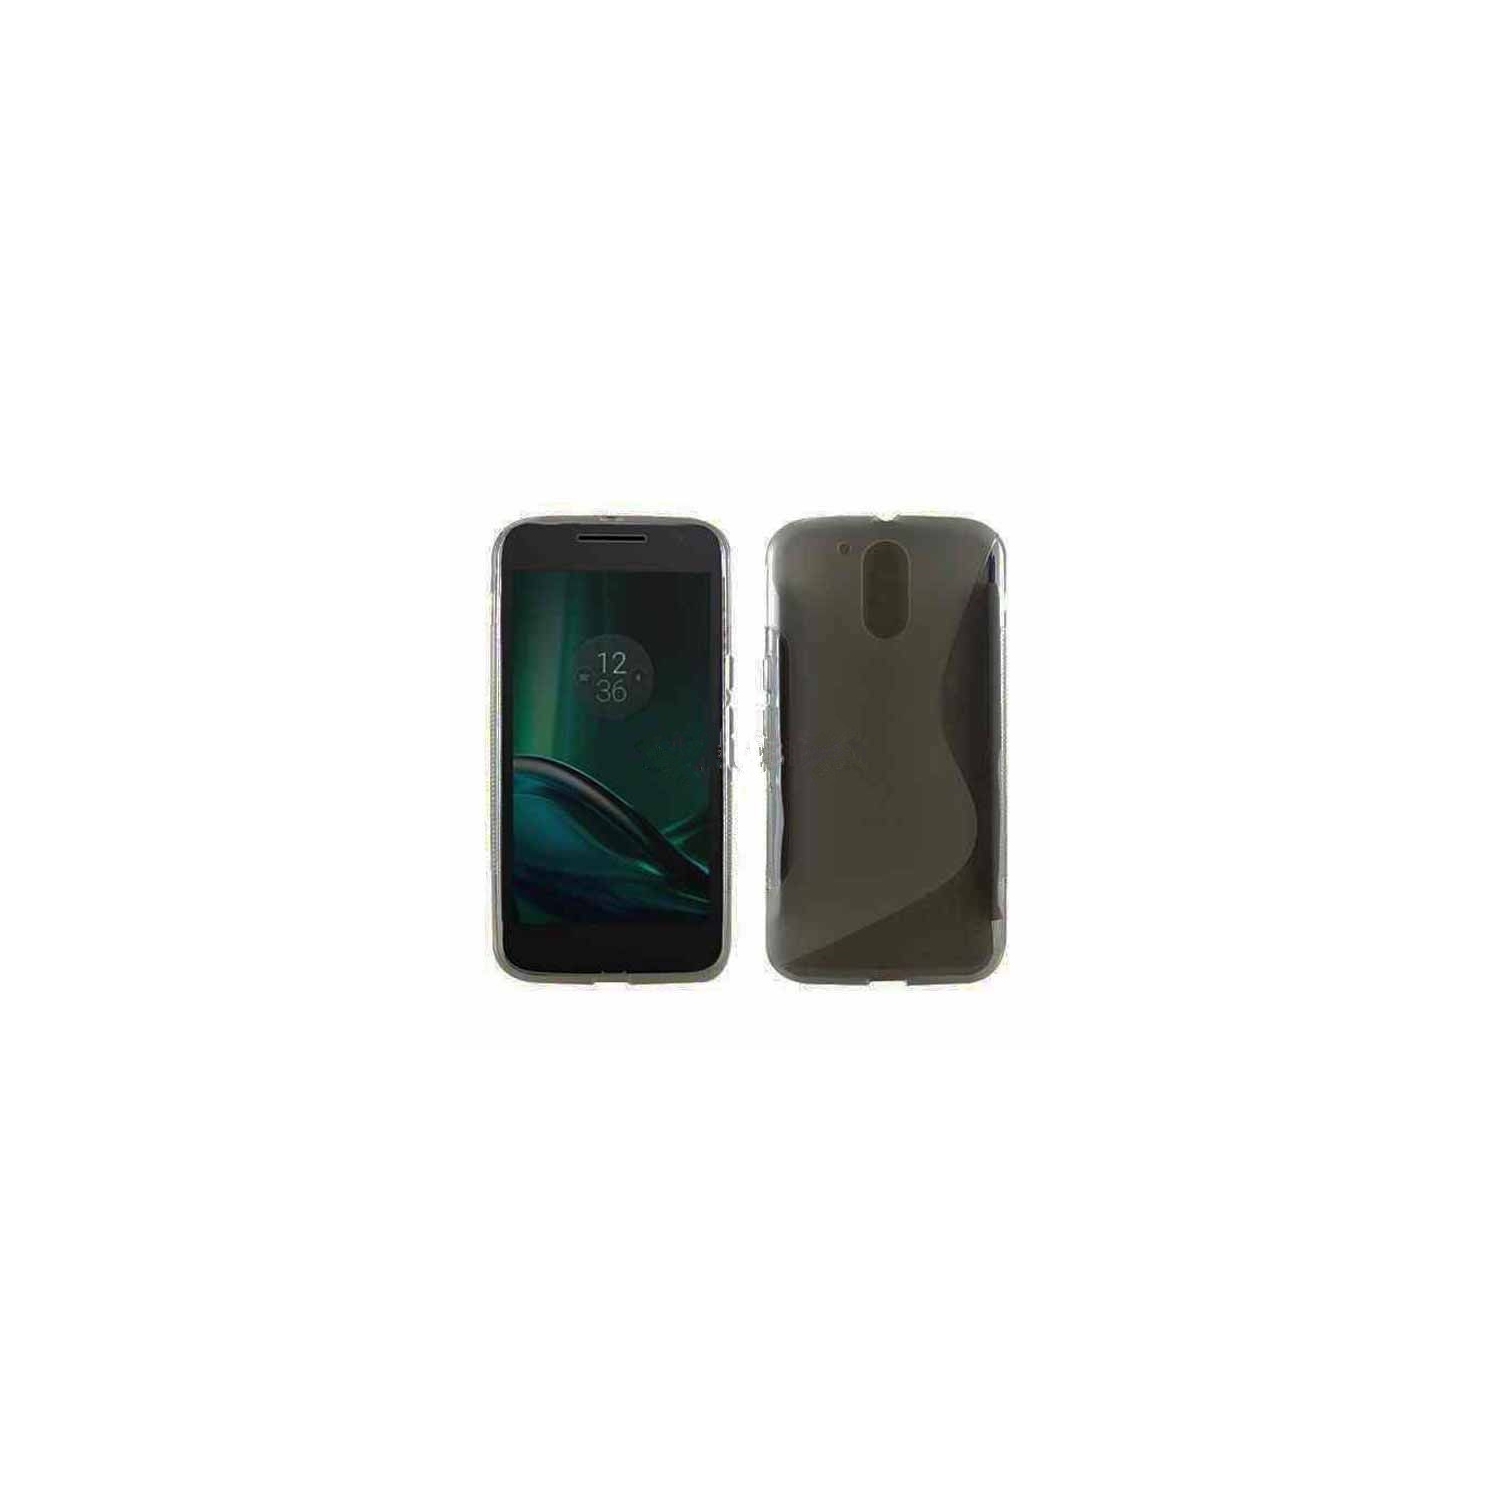 【CSmart】 Ultra Thin Soft TPU Silicone Jelly Bumper Back Cover Case for Motorola G4 / G4 Plus, Smoke